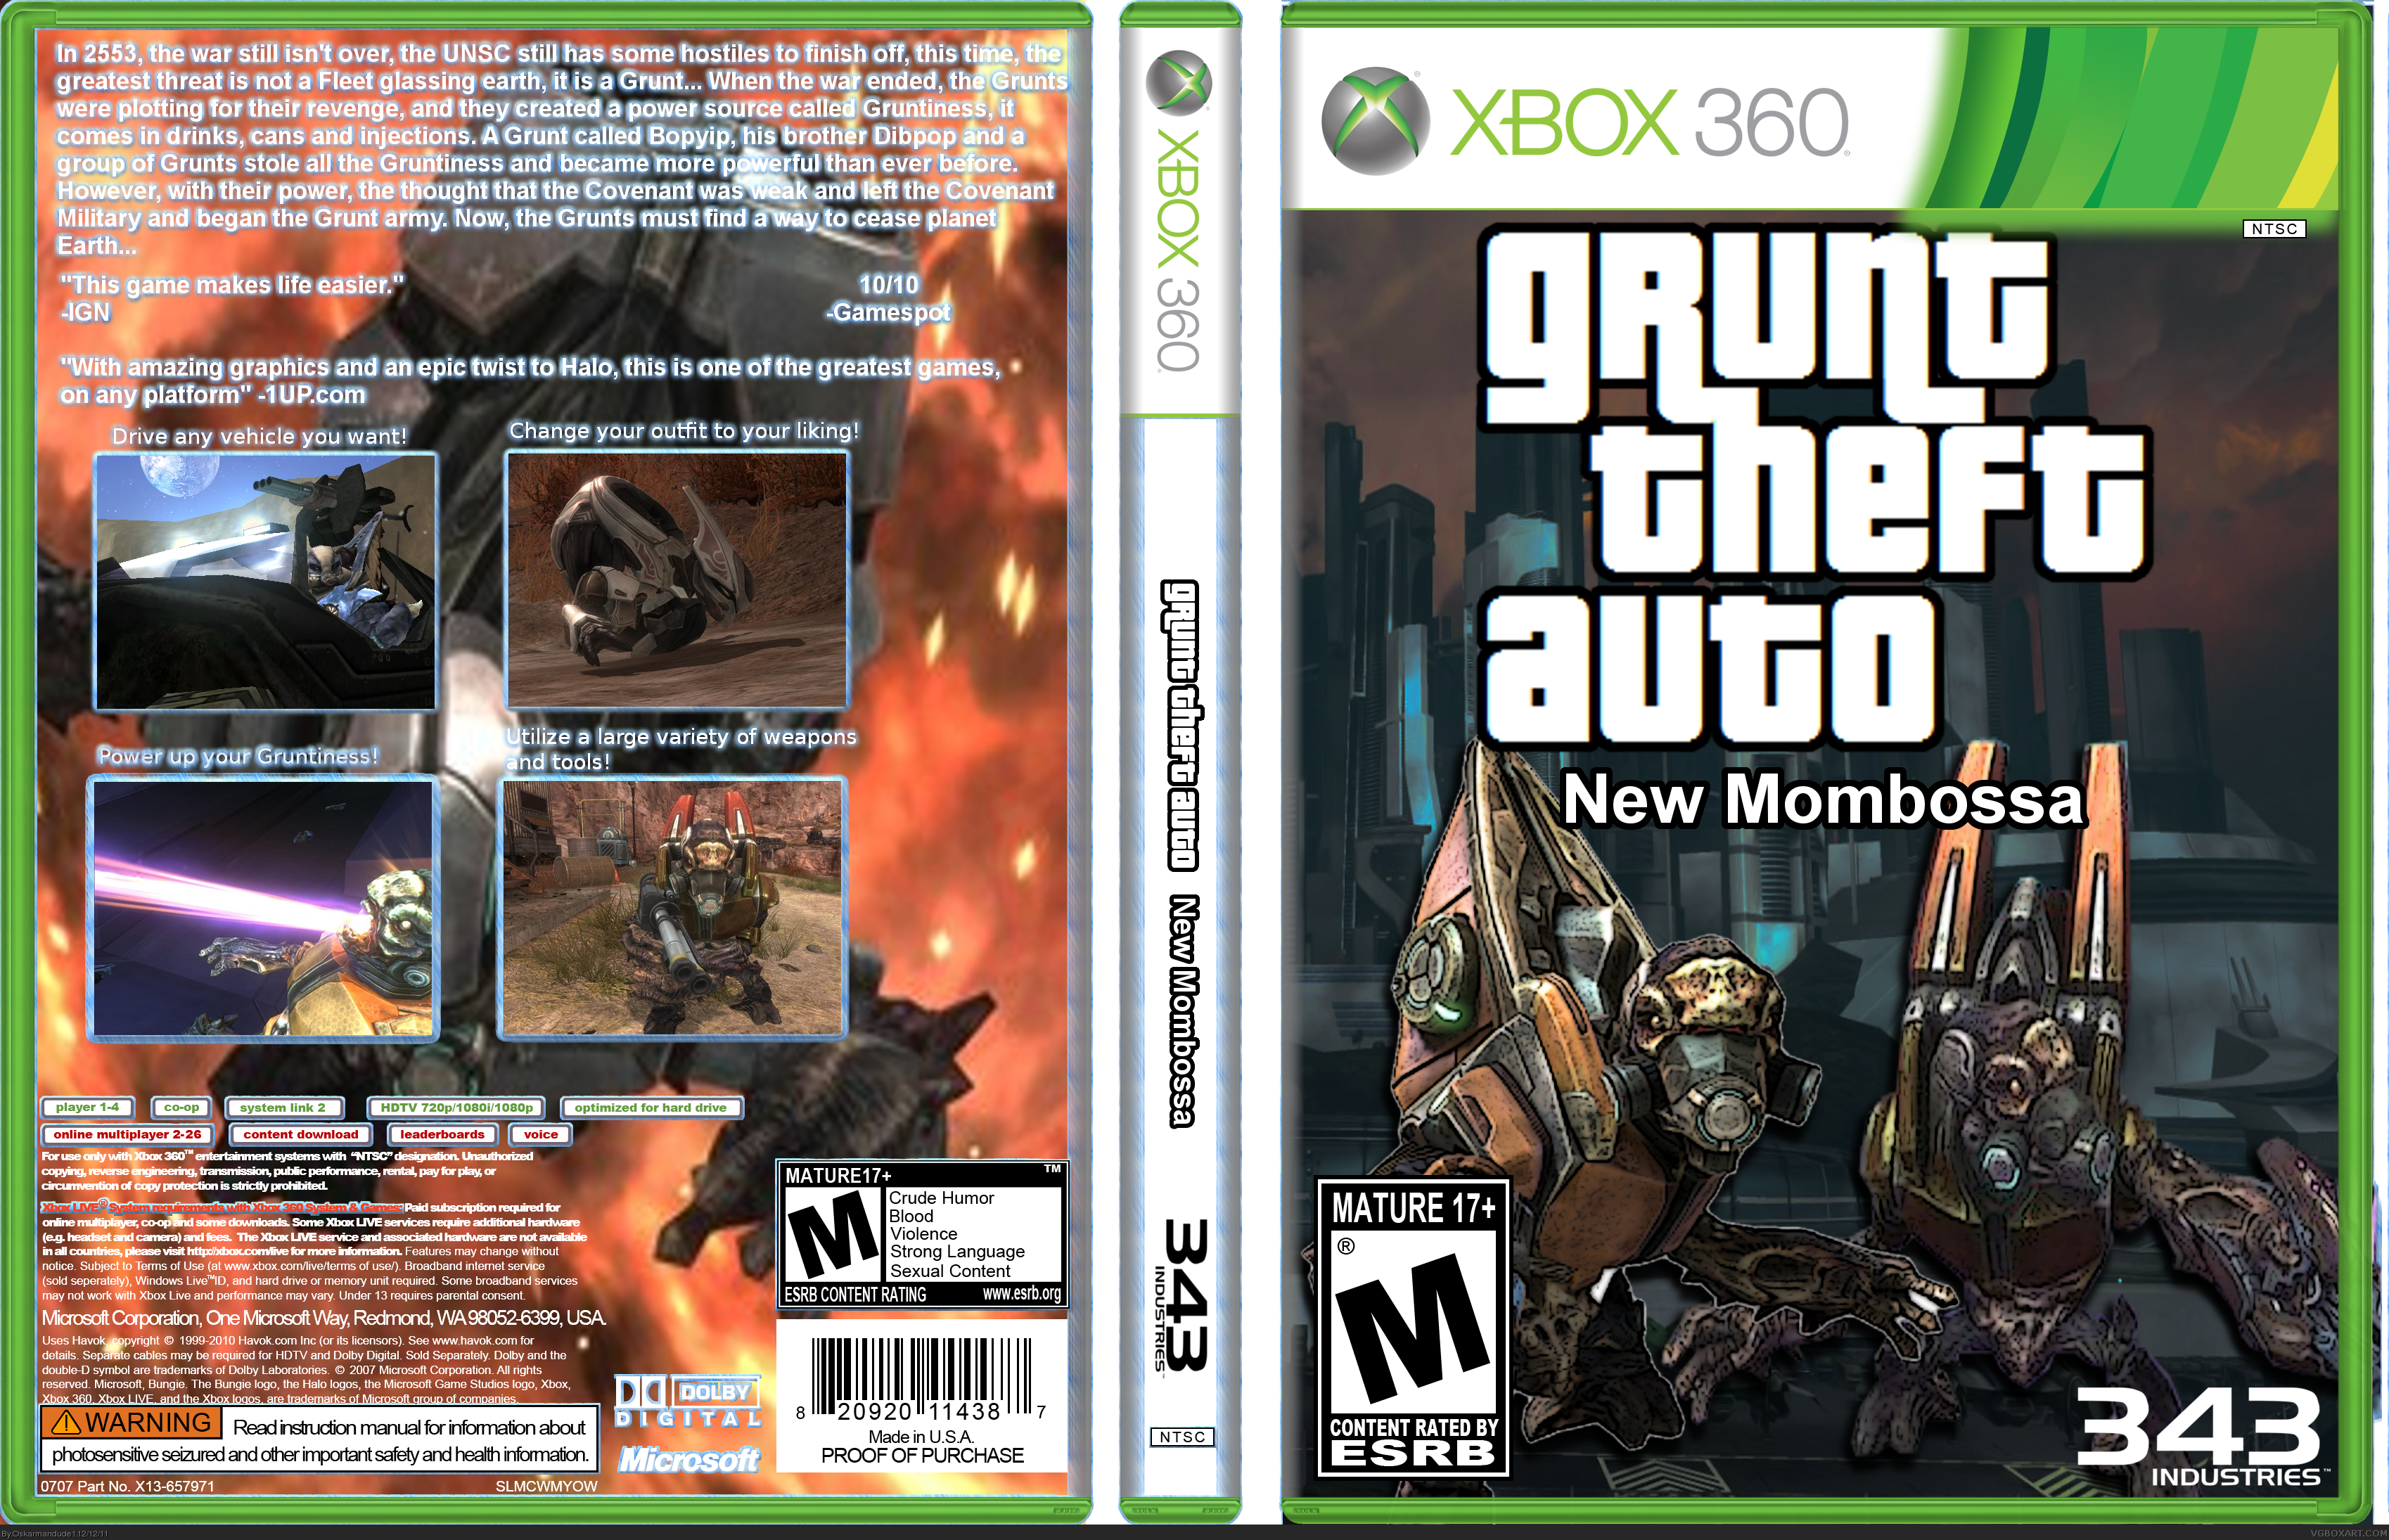 Grunt Theft Auto box cover